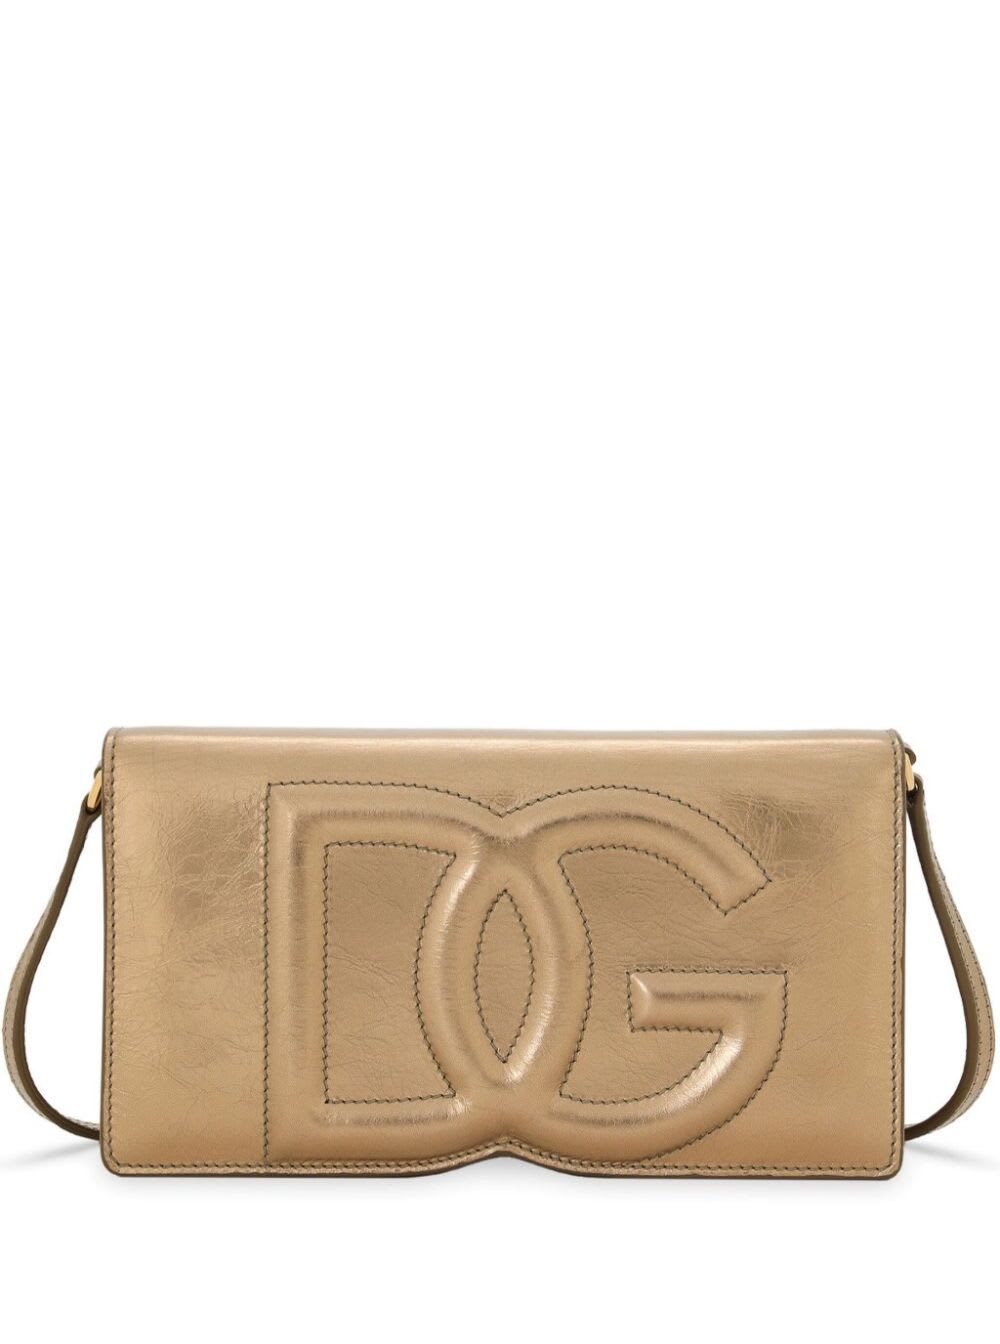 Dolce & Gabbana Phone Bag Vit.cracle'lame' In Grey